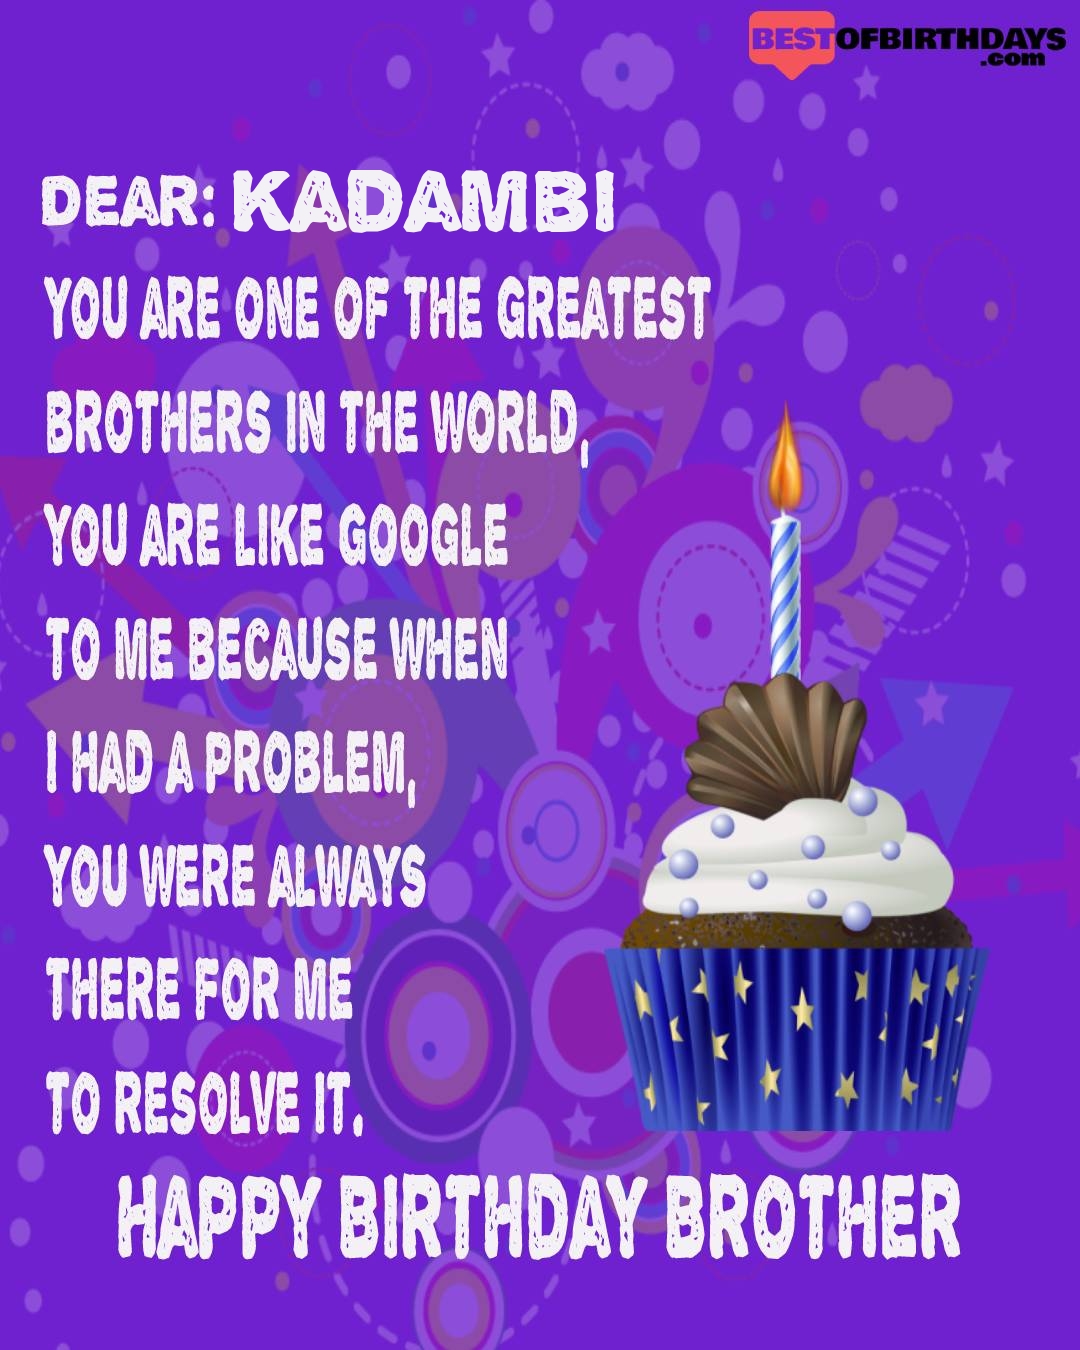 Happy birthday kadambi bhai brother bro